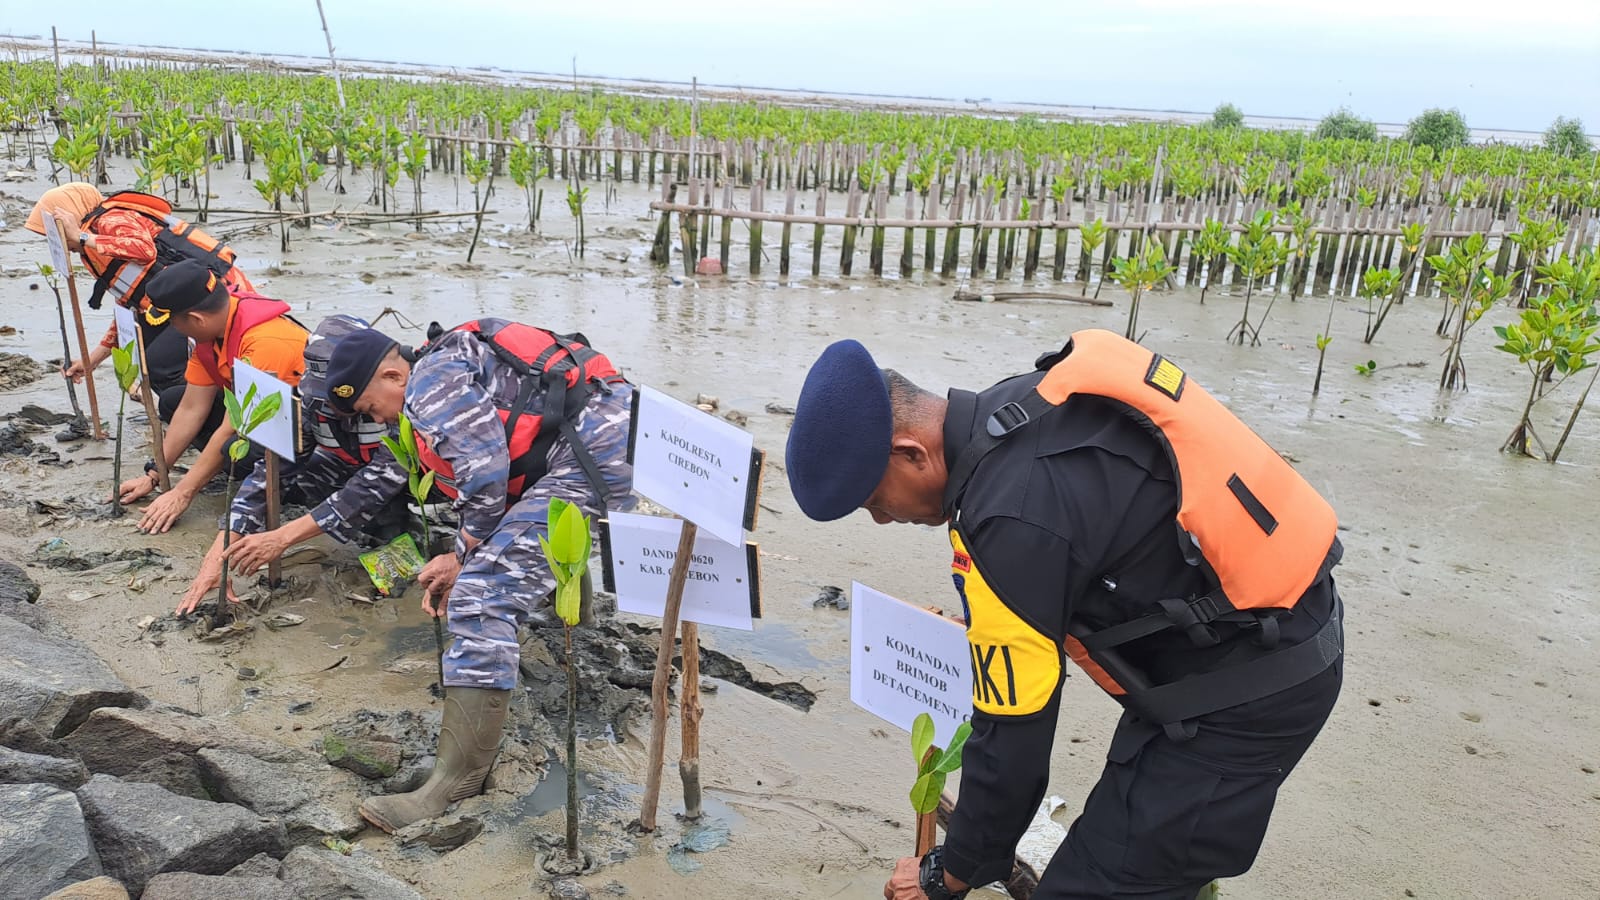 Kantor SAR Bandung Tanam 500 Bibit Mangrove di Pantai Muara Bondet